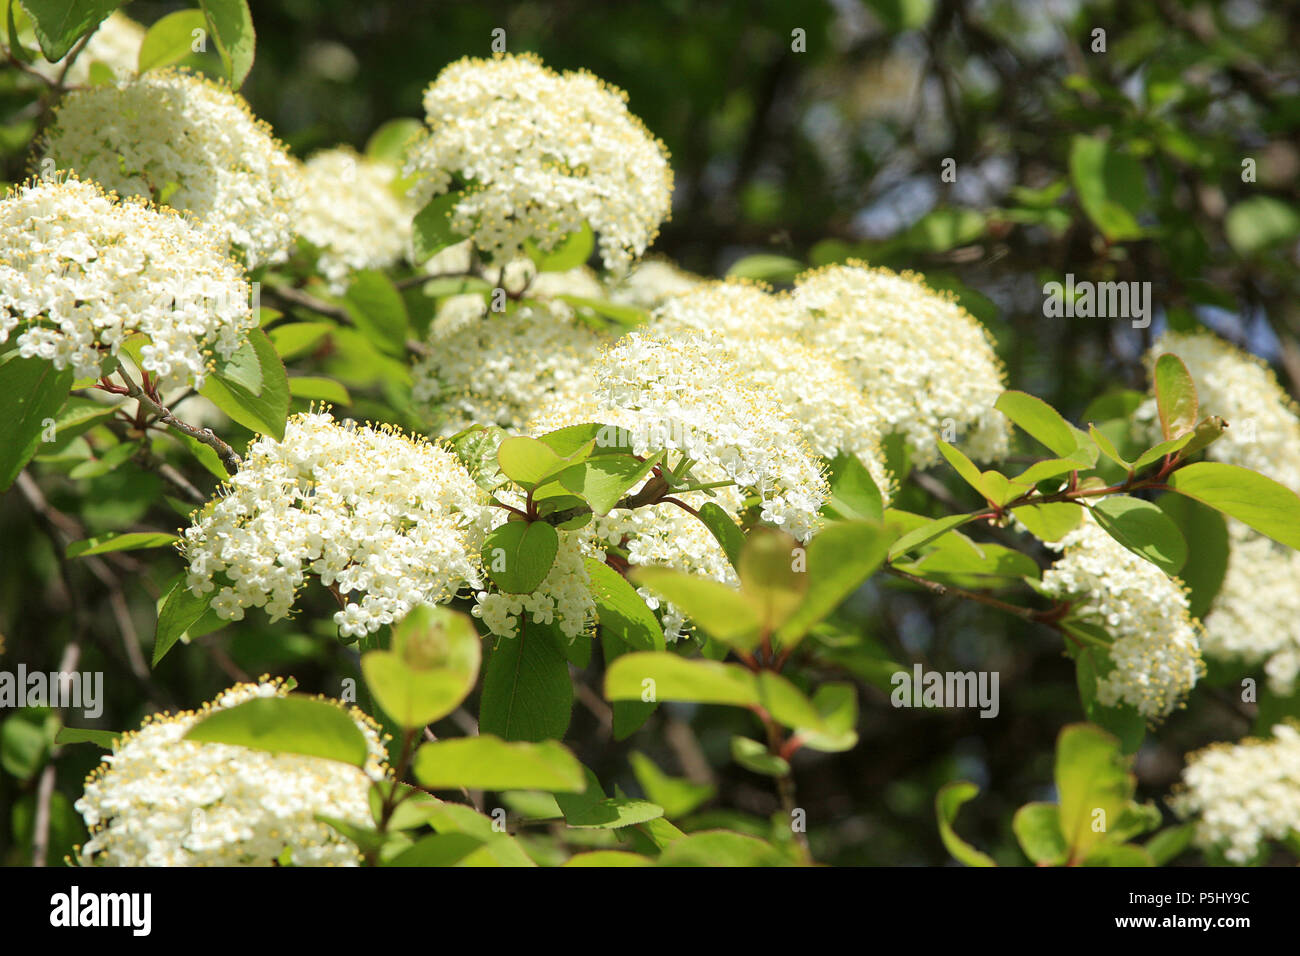 Elderberry flower clusters Stock Photo